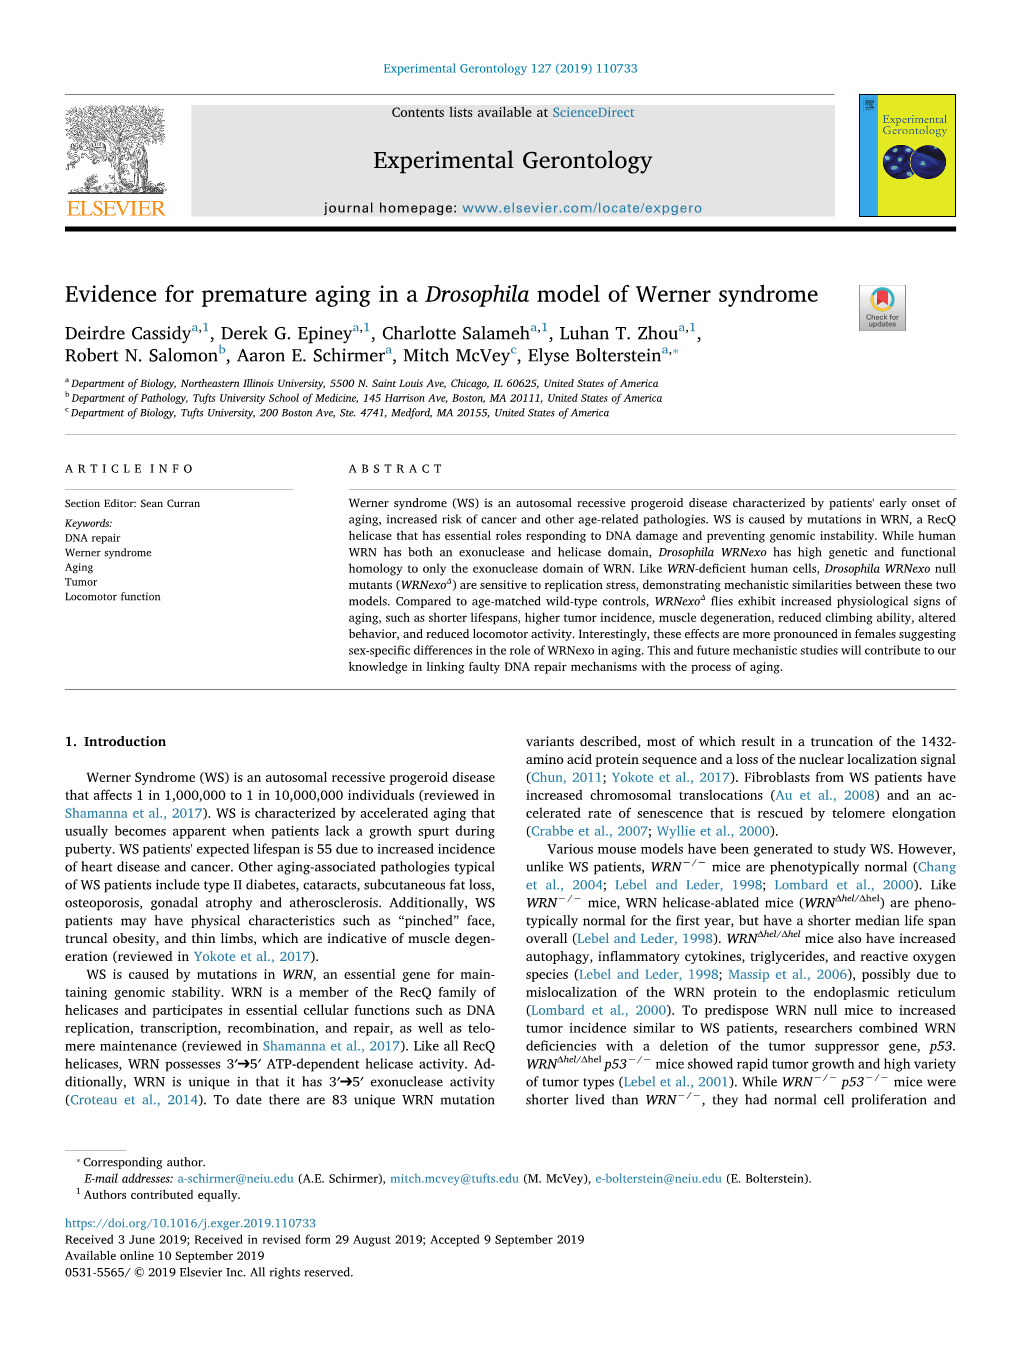 Evidence for Premature Aging in a Drosophila Model of Werner Syndrome T Deirdre Cassidya,1, Derek G